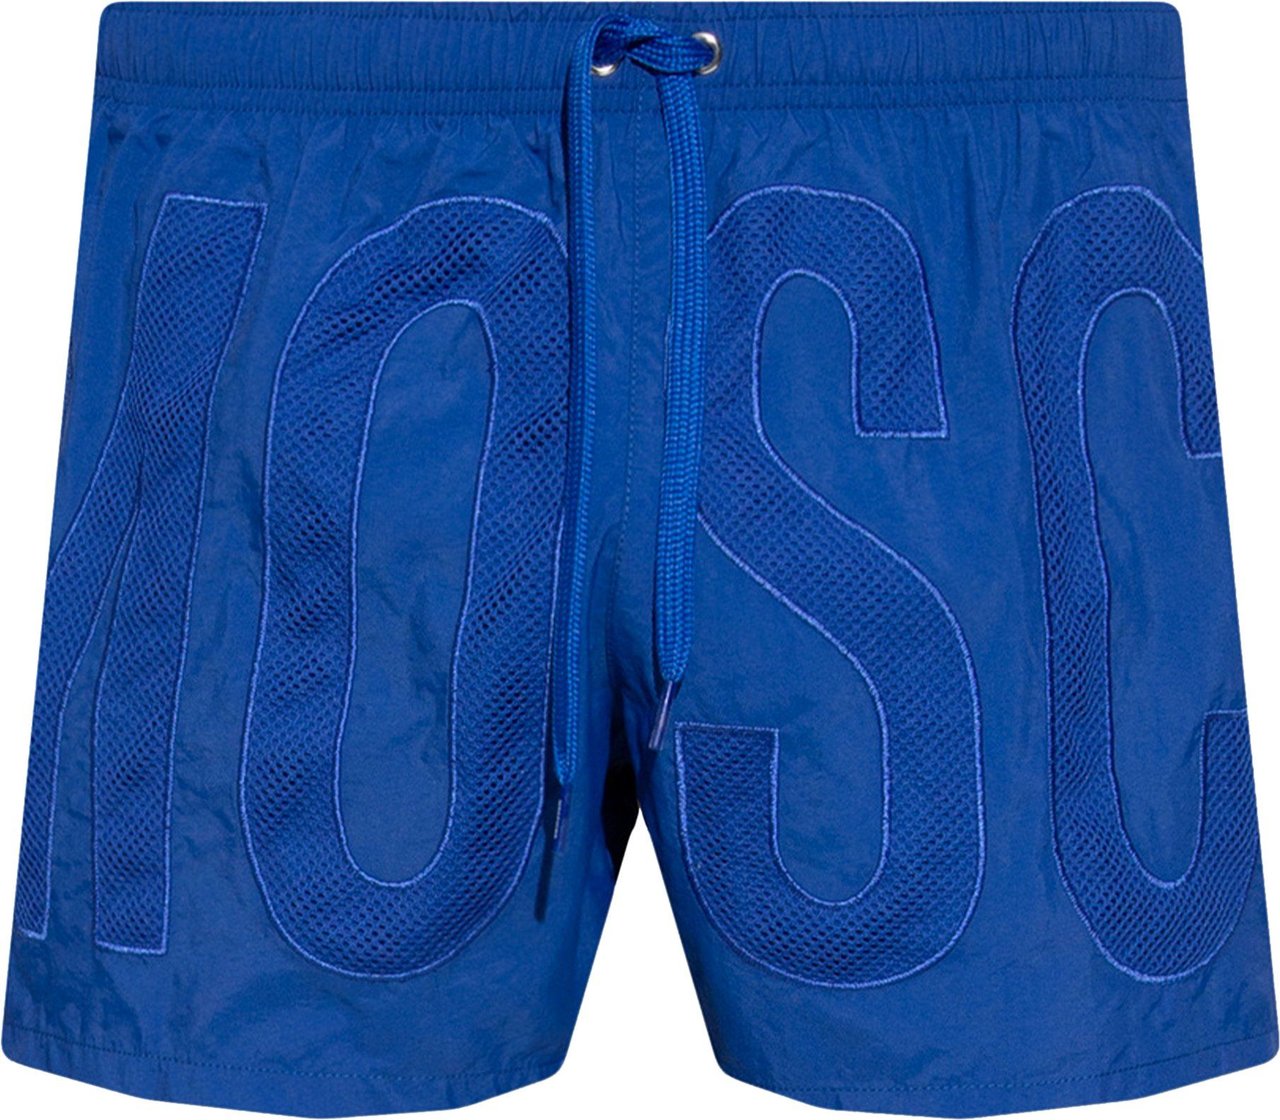 Moschino Swimsuit Man Short Boxer 6120.5989.a0345 Blauw